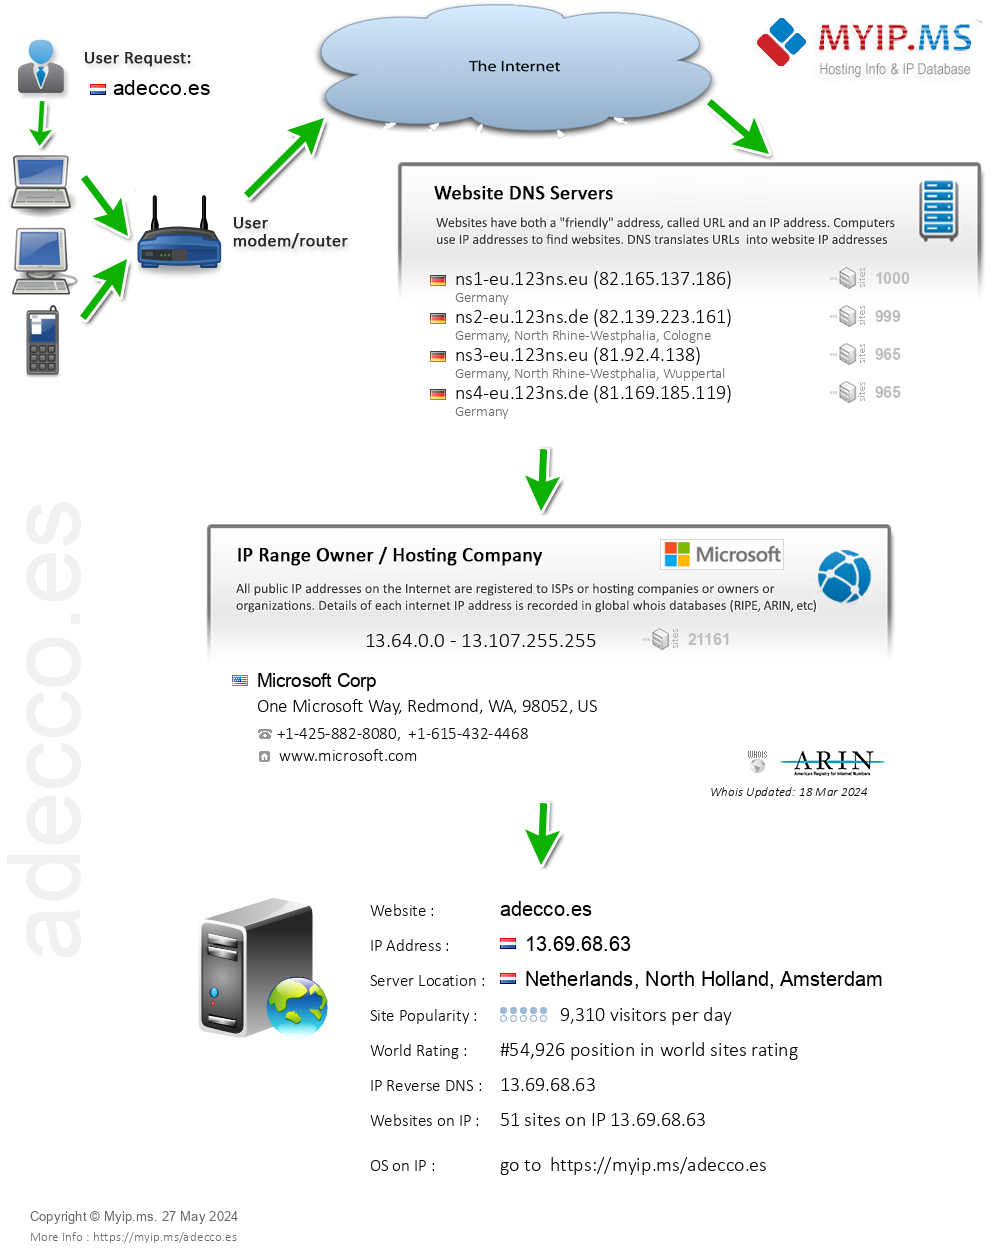 Adecco.es - Website Hosting Visual IP Diagram